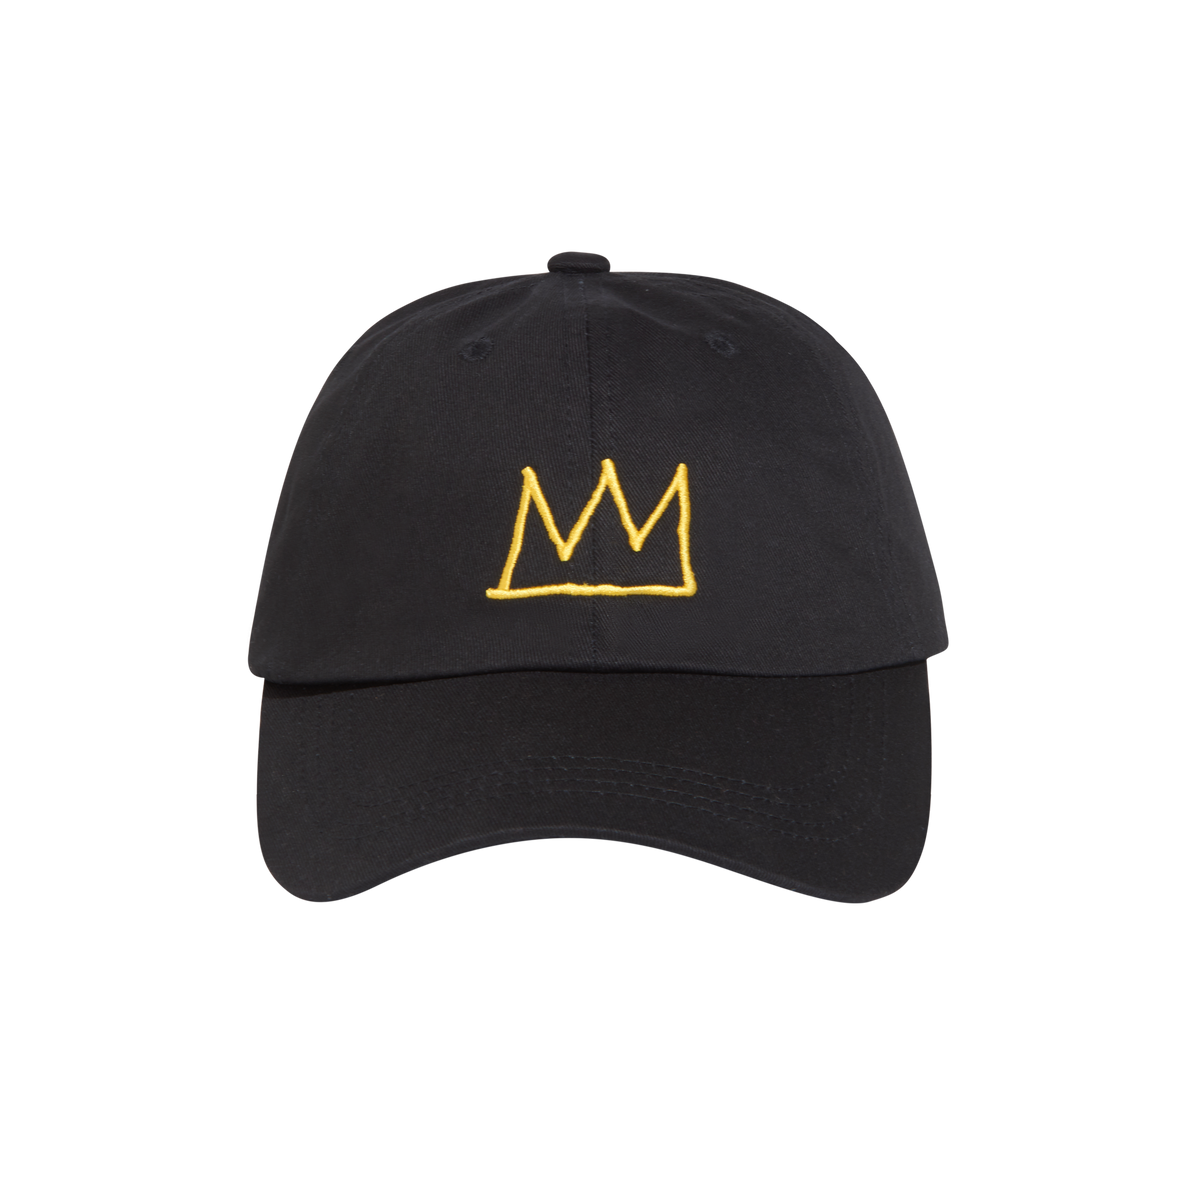 Basquiat Gold Crown Dad Cap